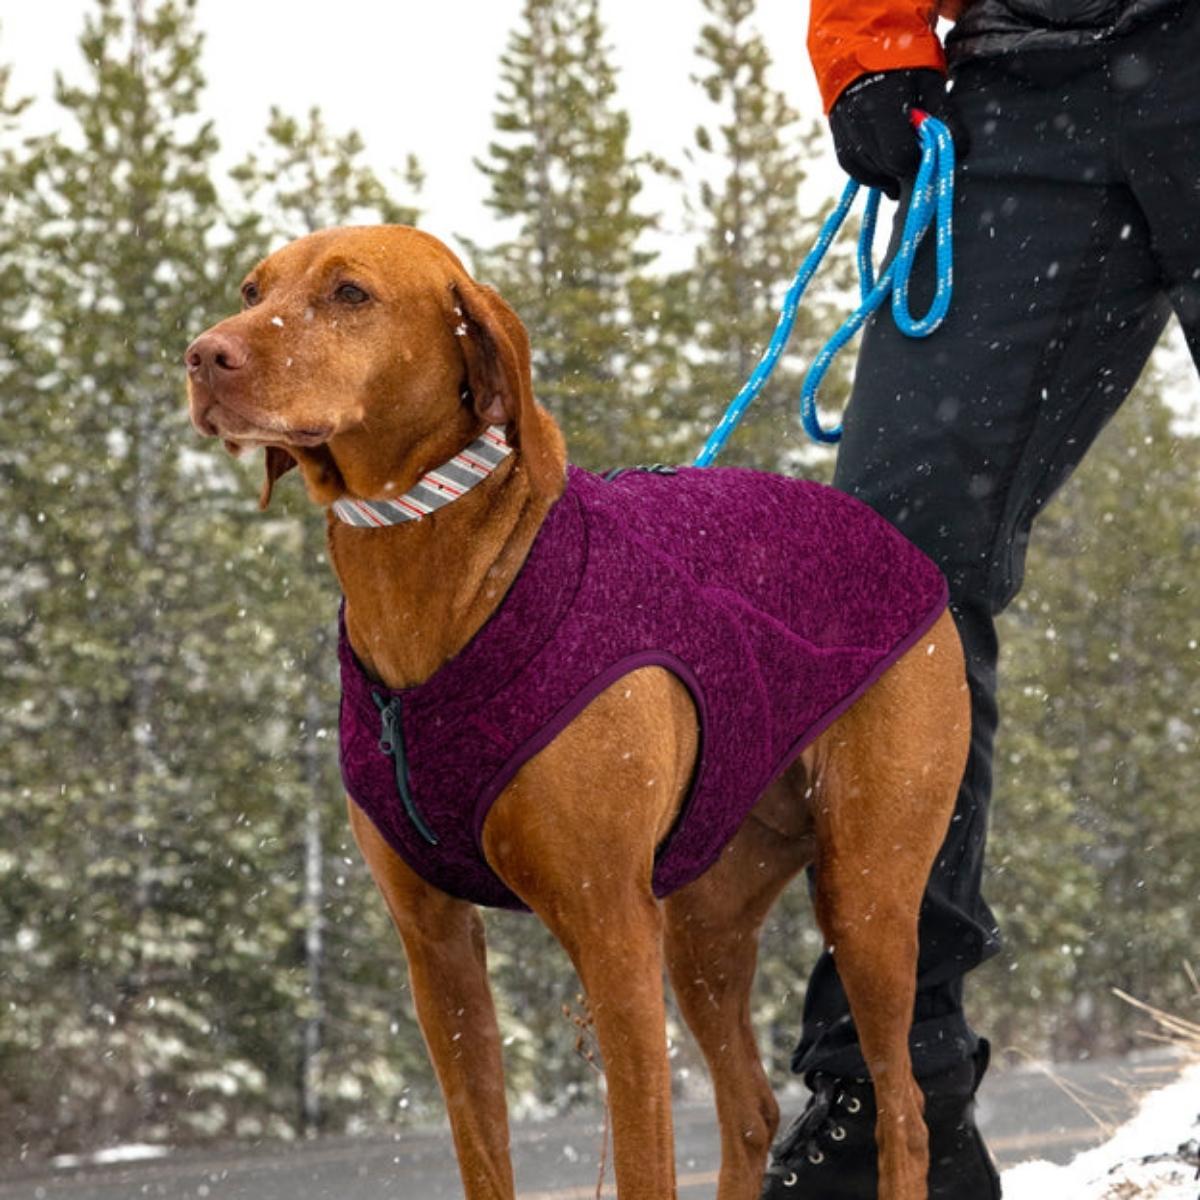 Suéter para Perro de Punto Polar Verde de Kurgo